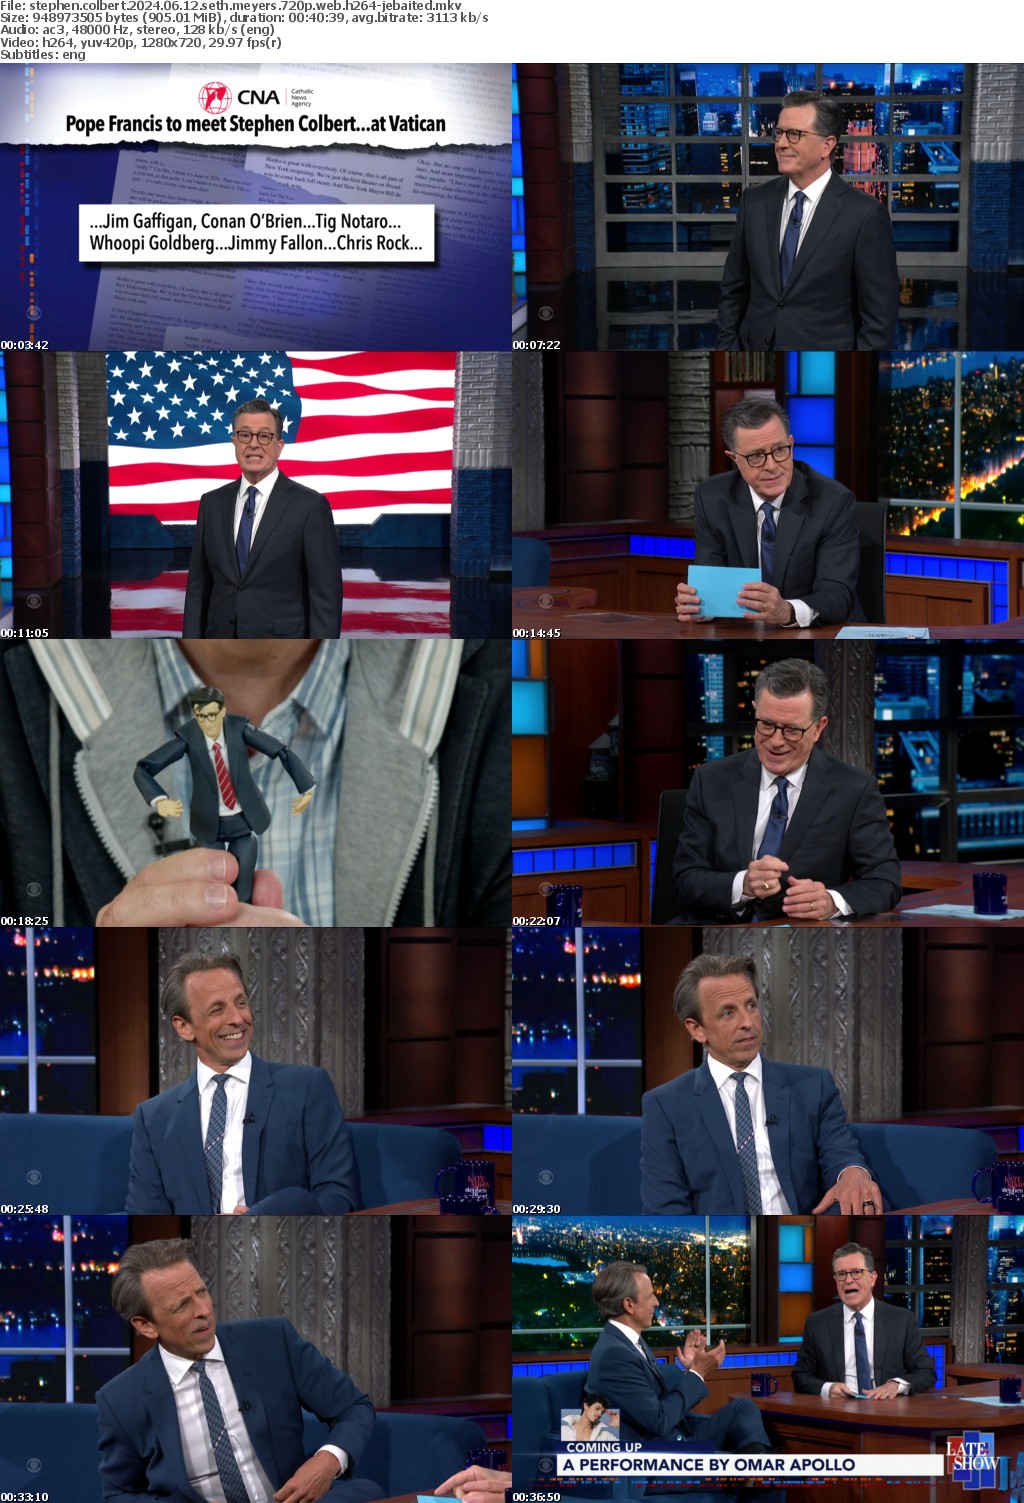 Stephen Colbert 2024 06 12 Seth Meyers 720p WEB H264-JEBAITED